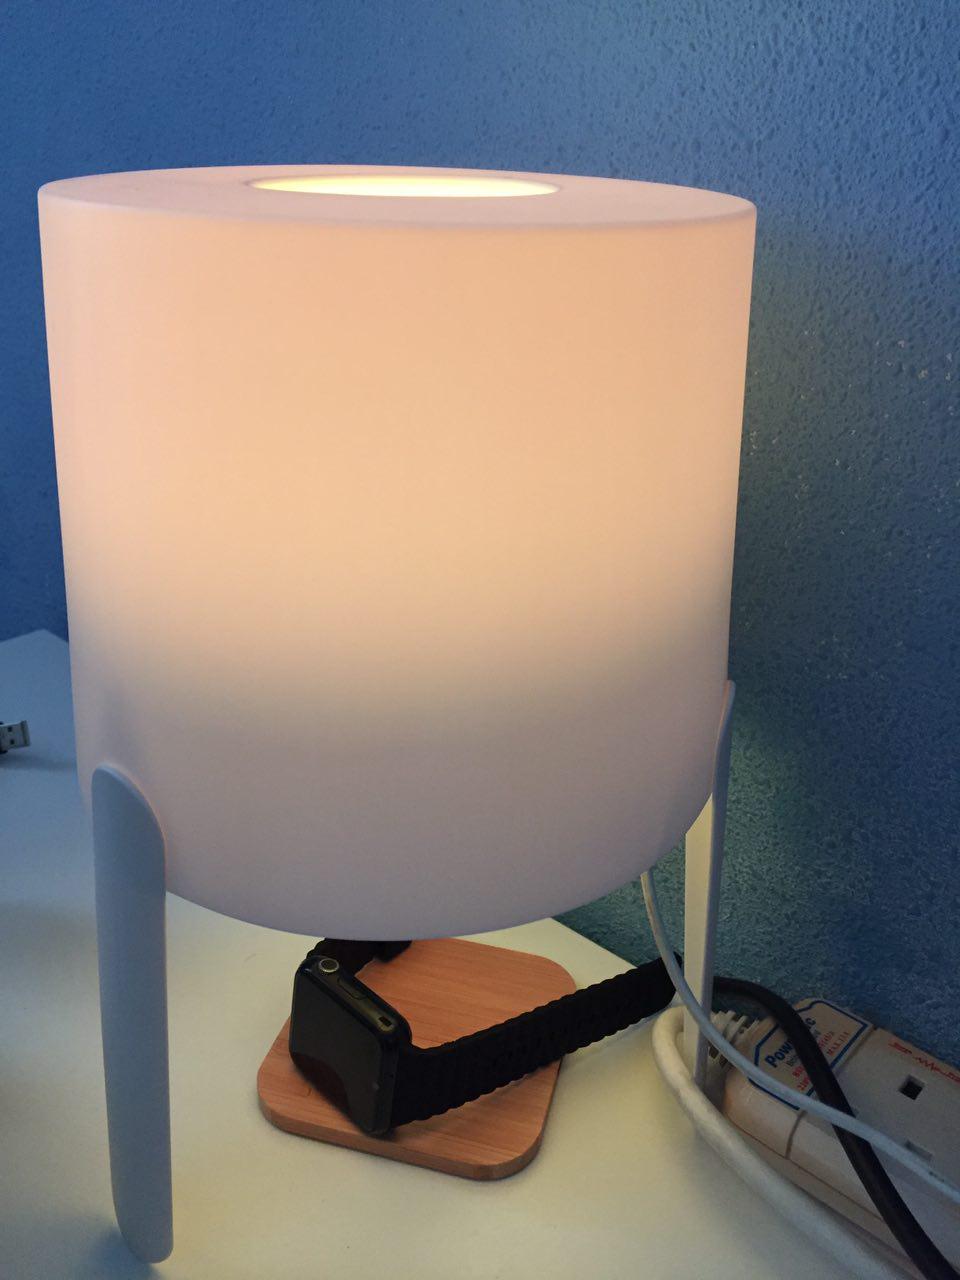 tvars table lamp